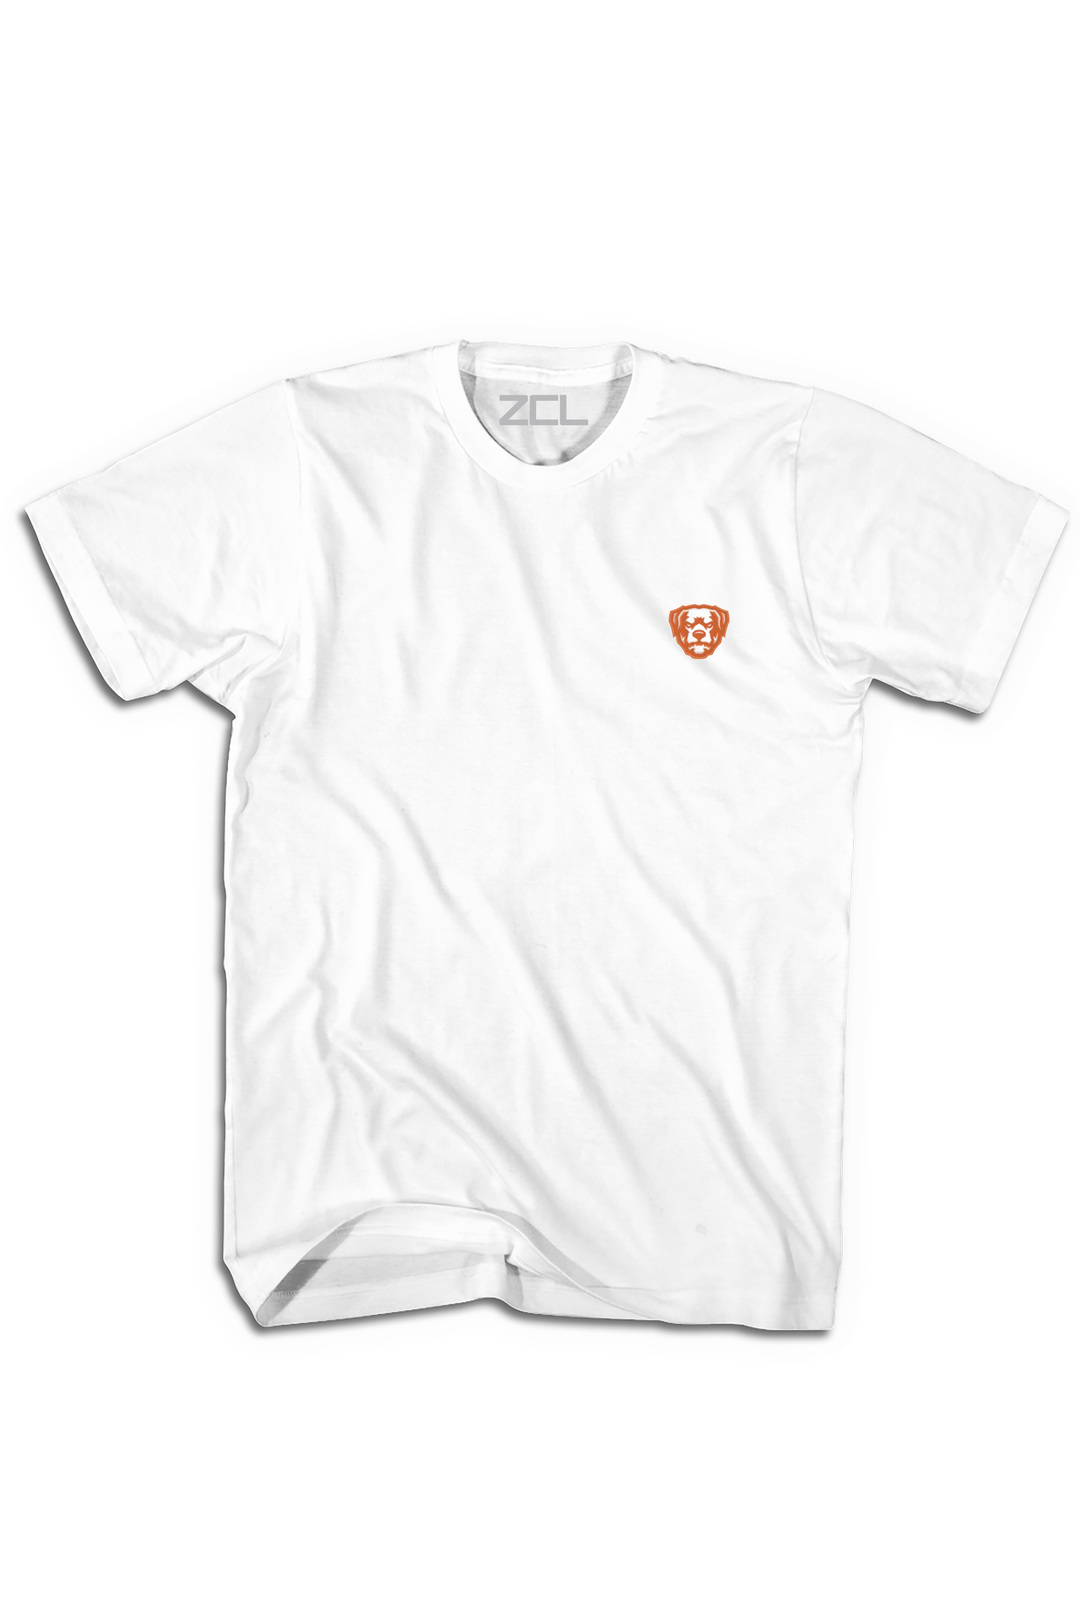 Embroidered ZCL Logo Tee White - Orange - Zamage